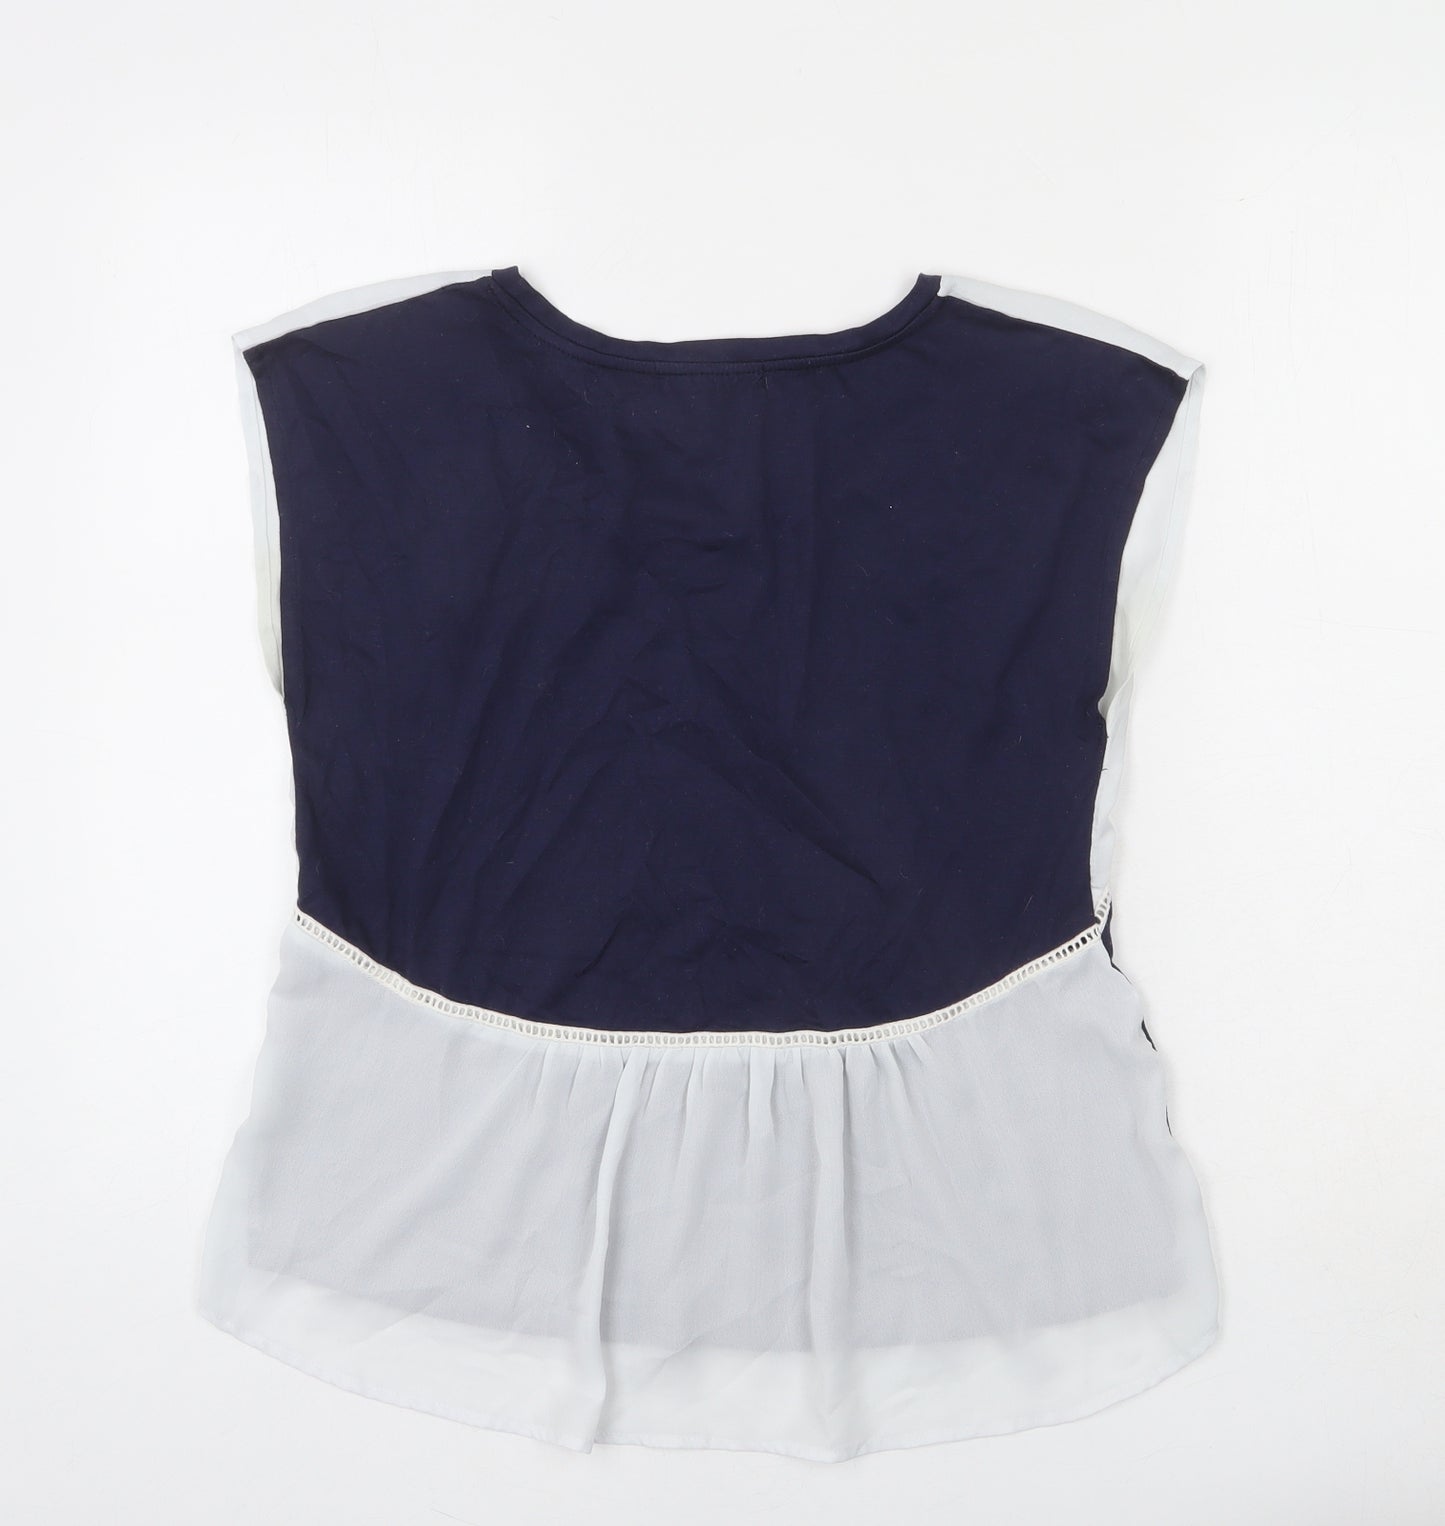 Pagani Womens Blue Polyester Basic T-Shirt Size S Round Neck